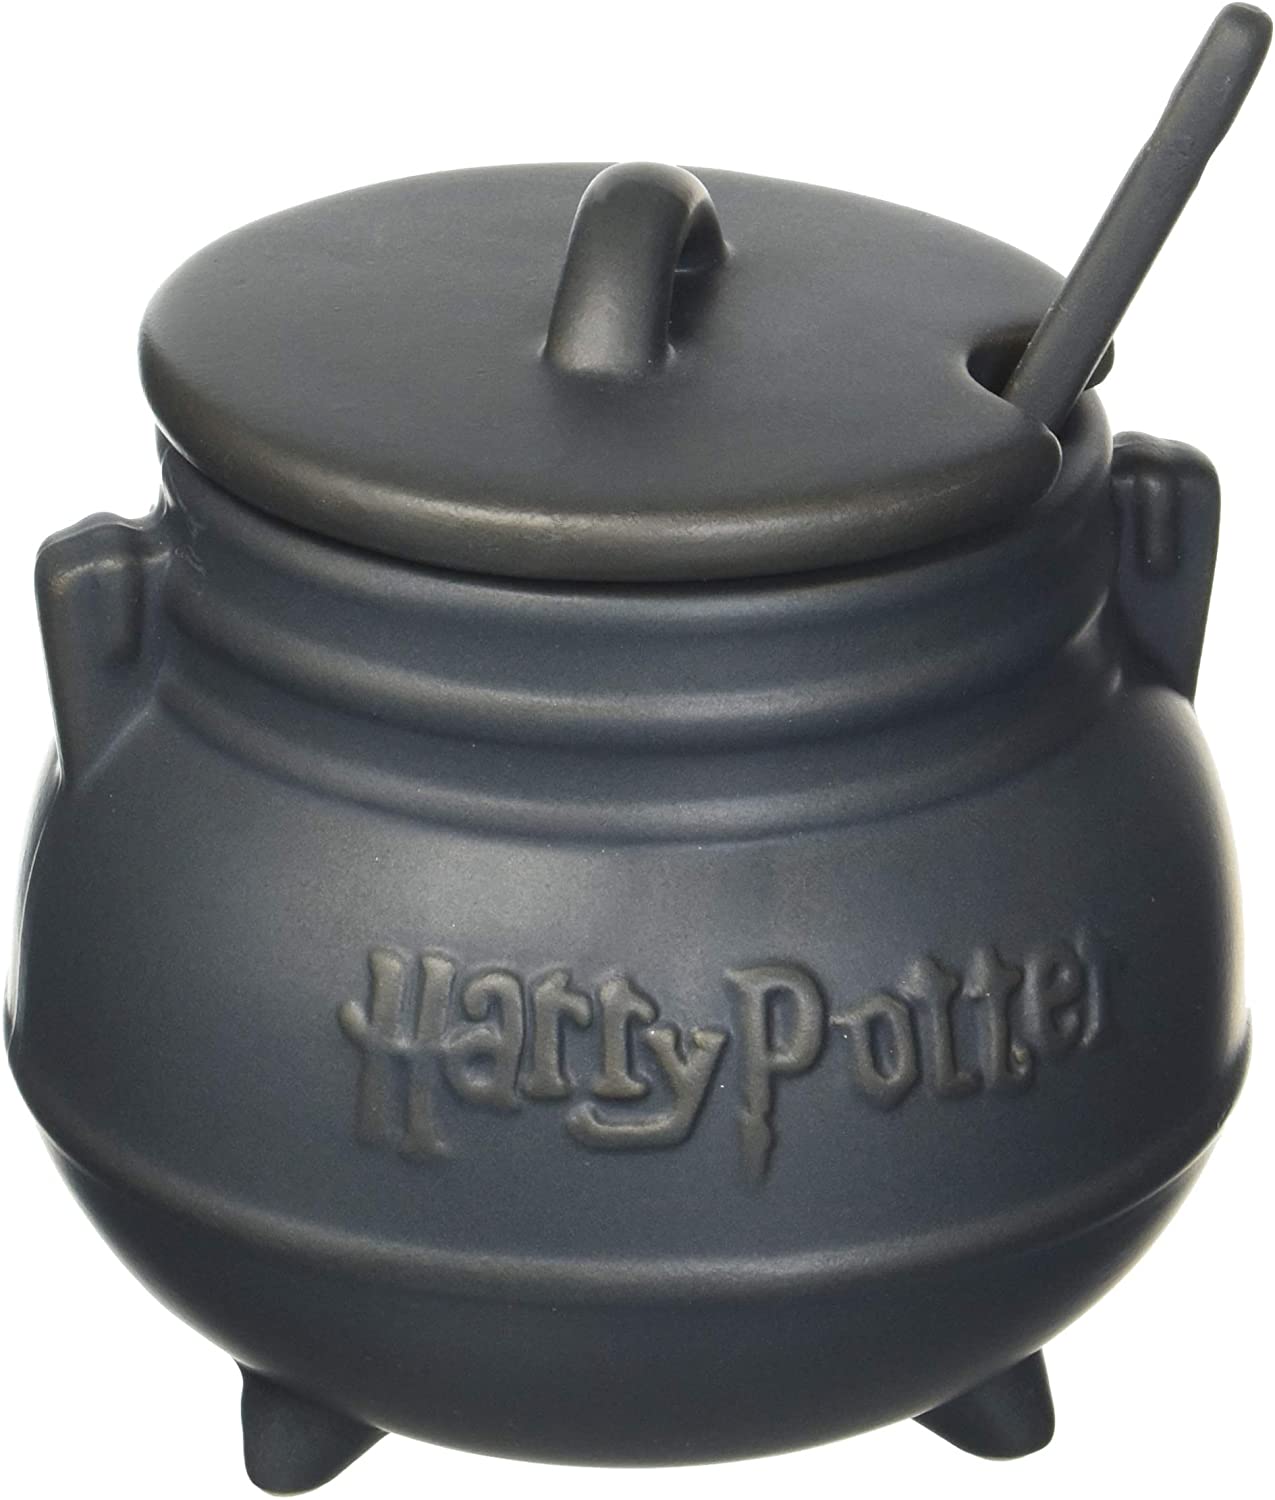 Taza caldero de sopa de Harry Potter en Amazon México.